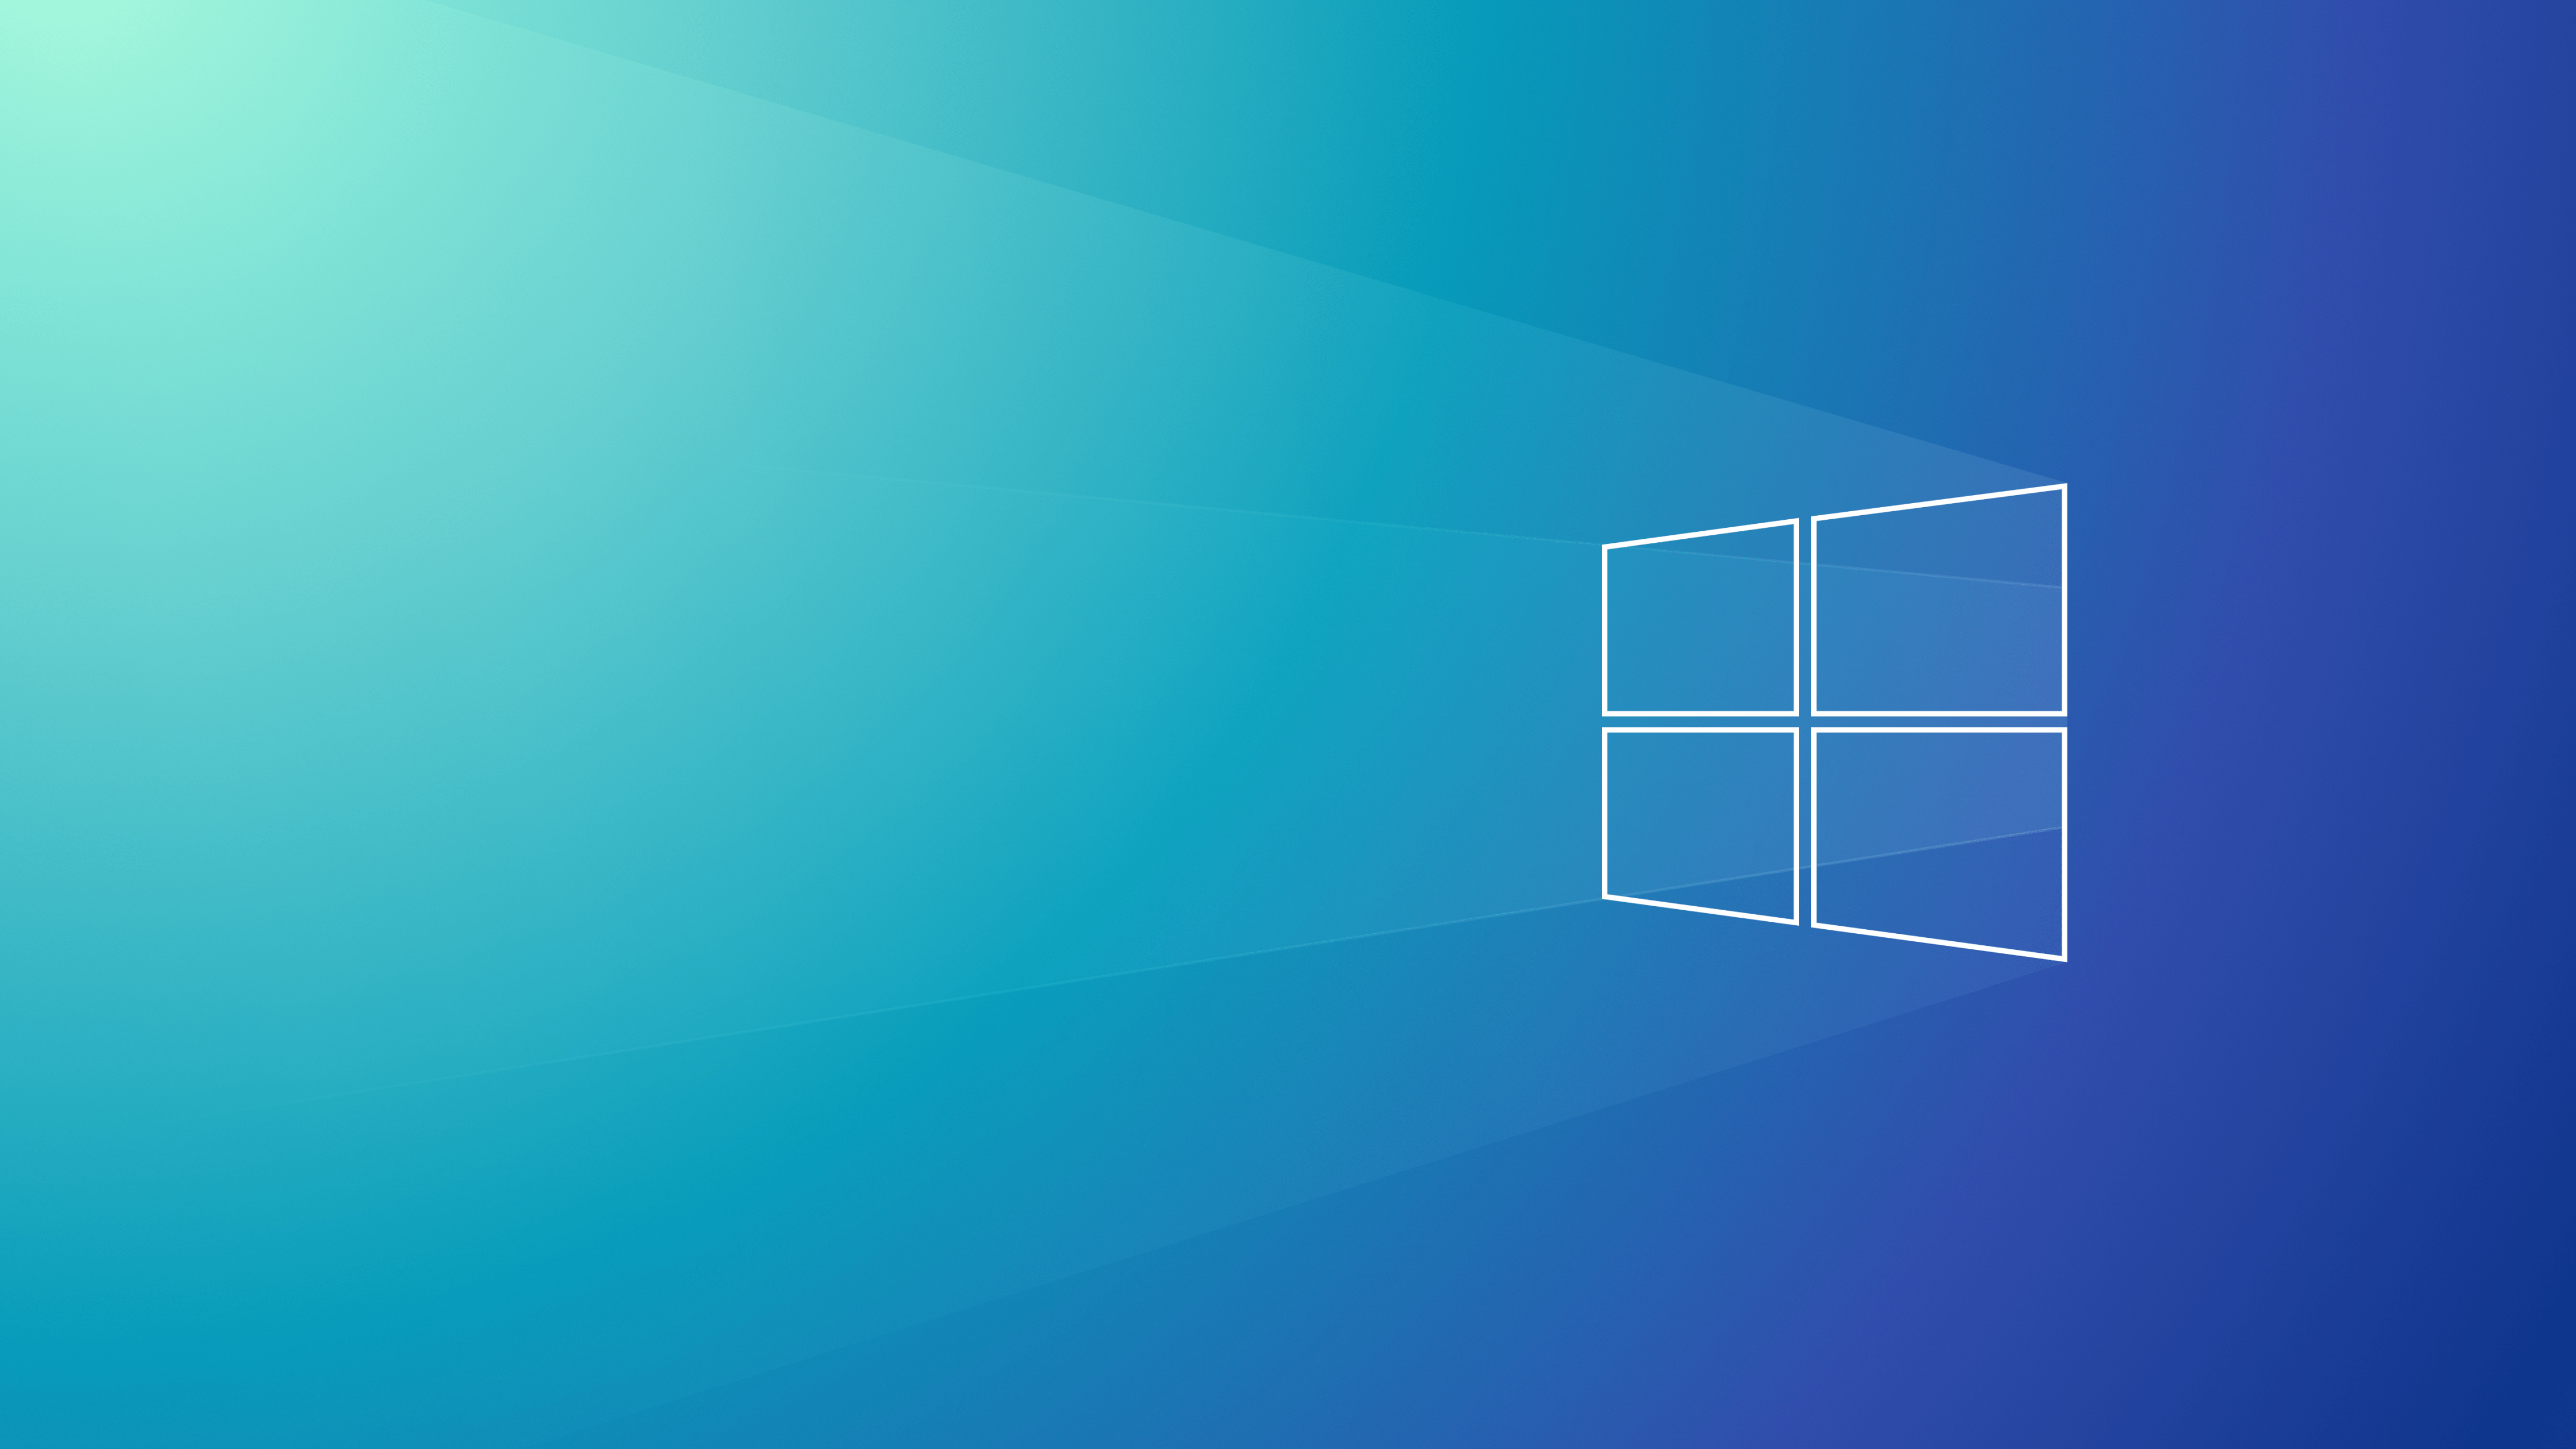 Windows 10 wallpaper, blue background with a white Windows logo - Windows 10